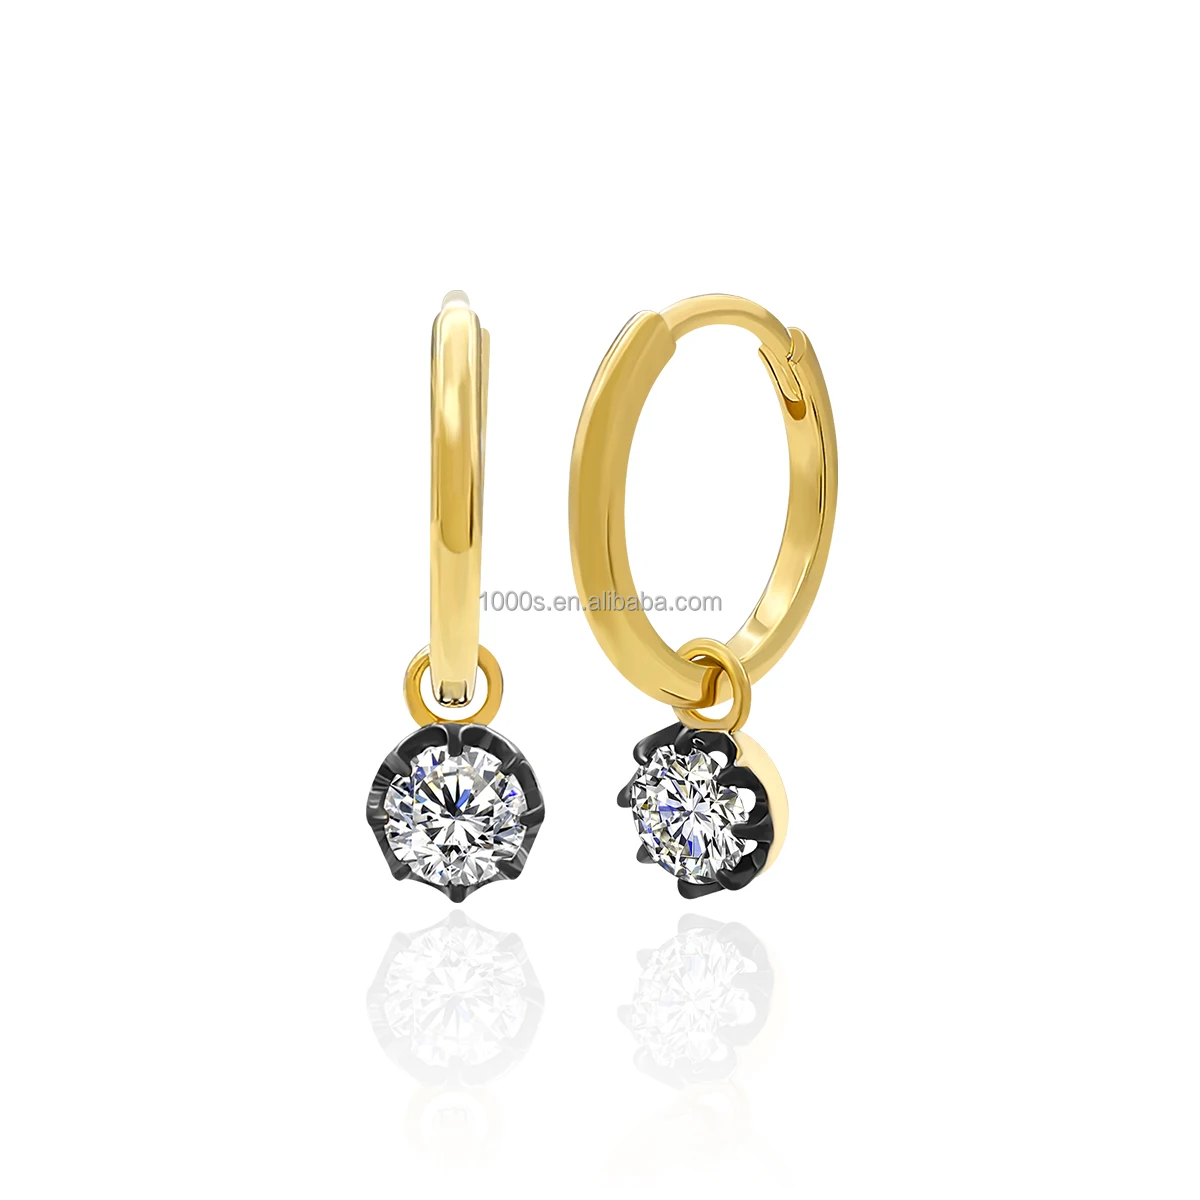 

Fine Jewelry Solid 14K Yellow Gold with Moissanite Hoop Earrings Huggie Earrings for Women Girl Gift Customize 9K 18K gold